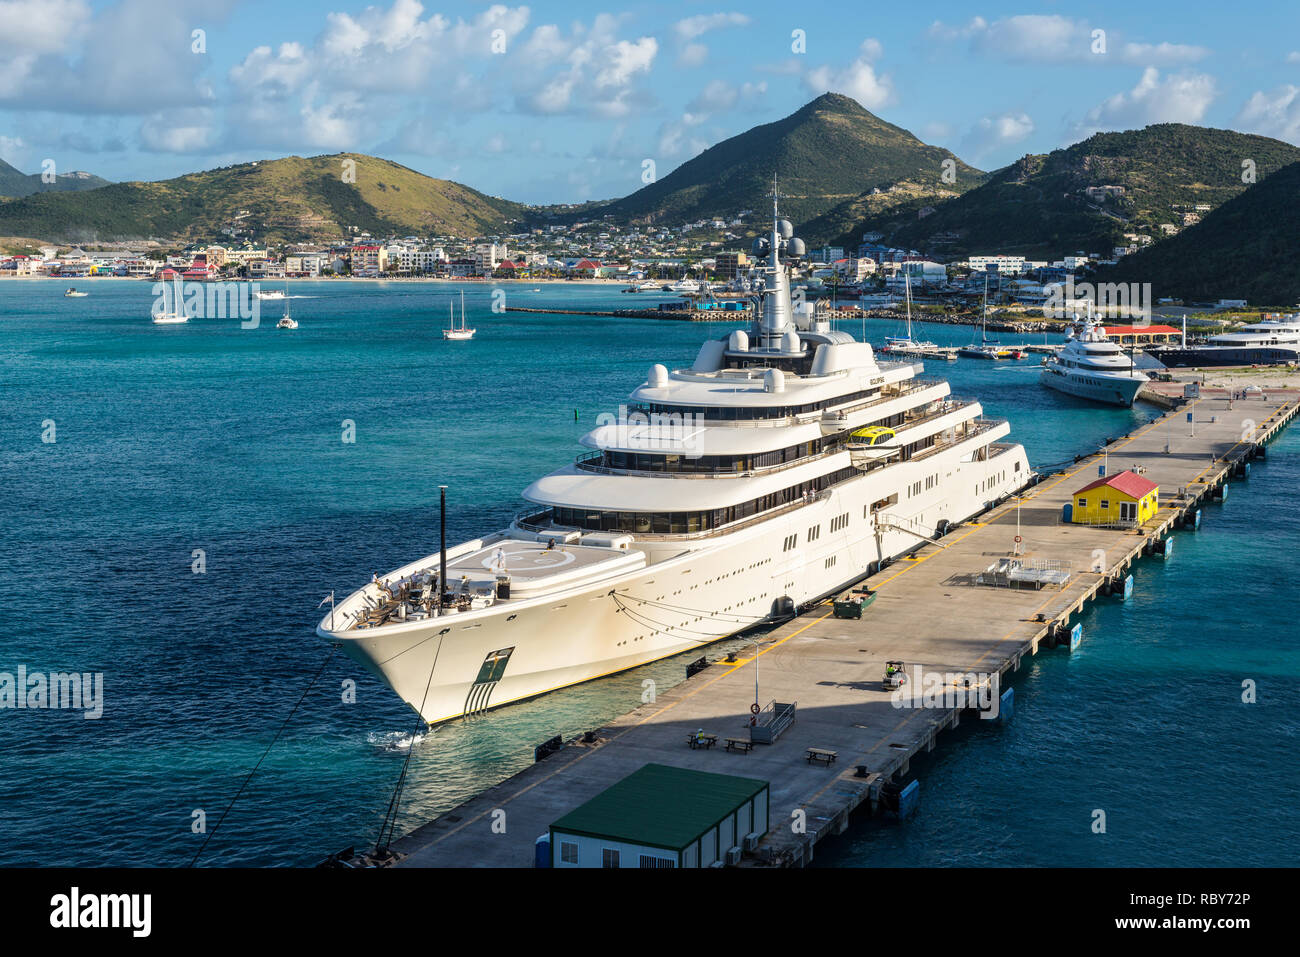 Philipsburg, St. Maarten - December 17, 2018: Private white luxury motor Superyacht Eclipse moored in Caribbean island of Sint Maarten - Saint Martin. Stock Photo